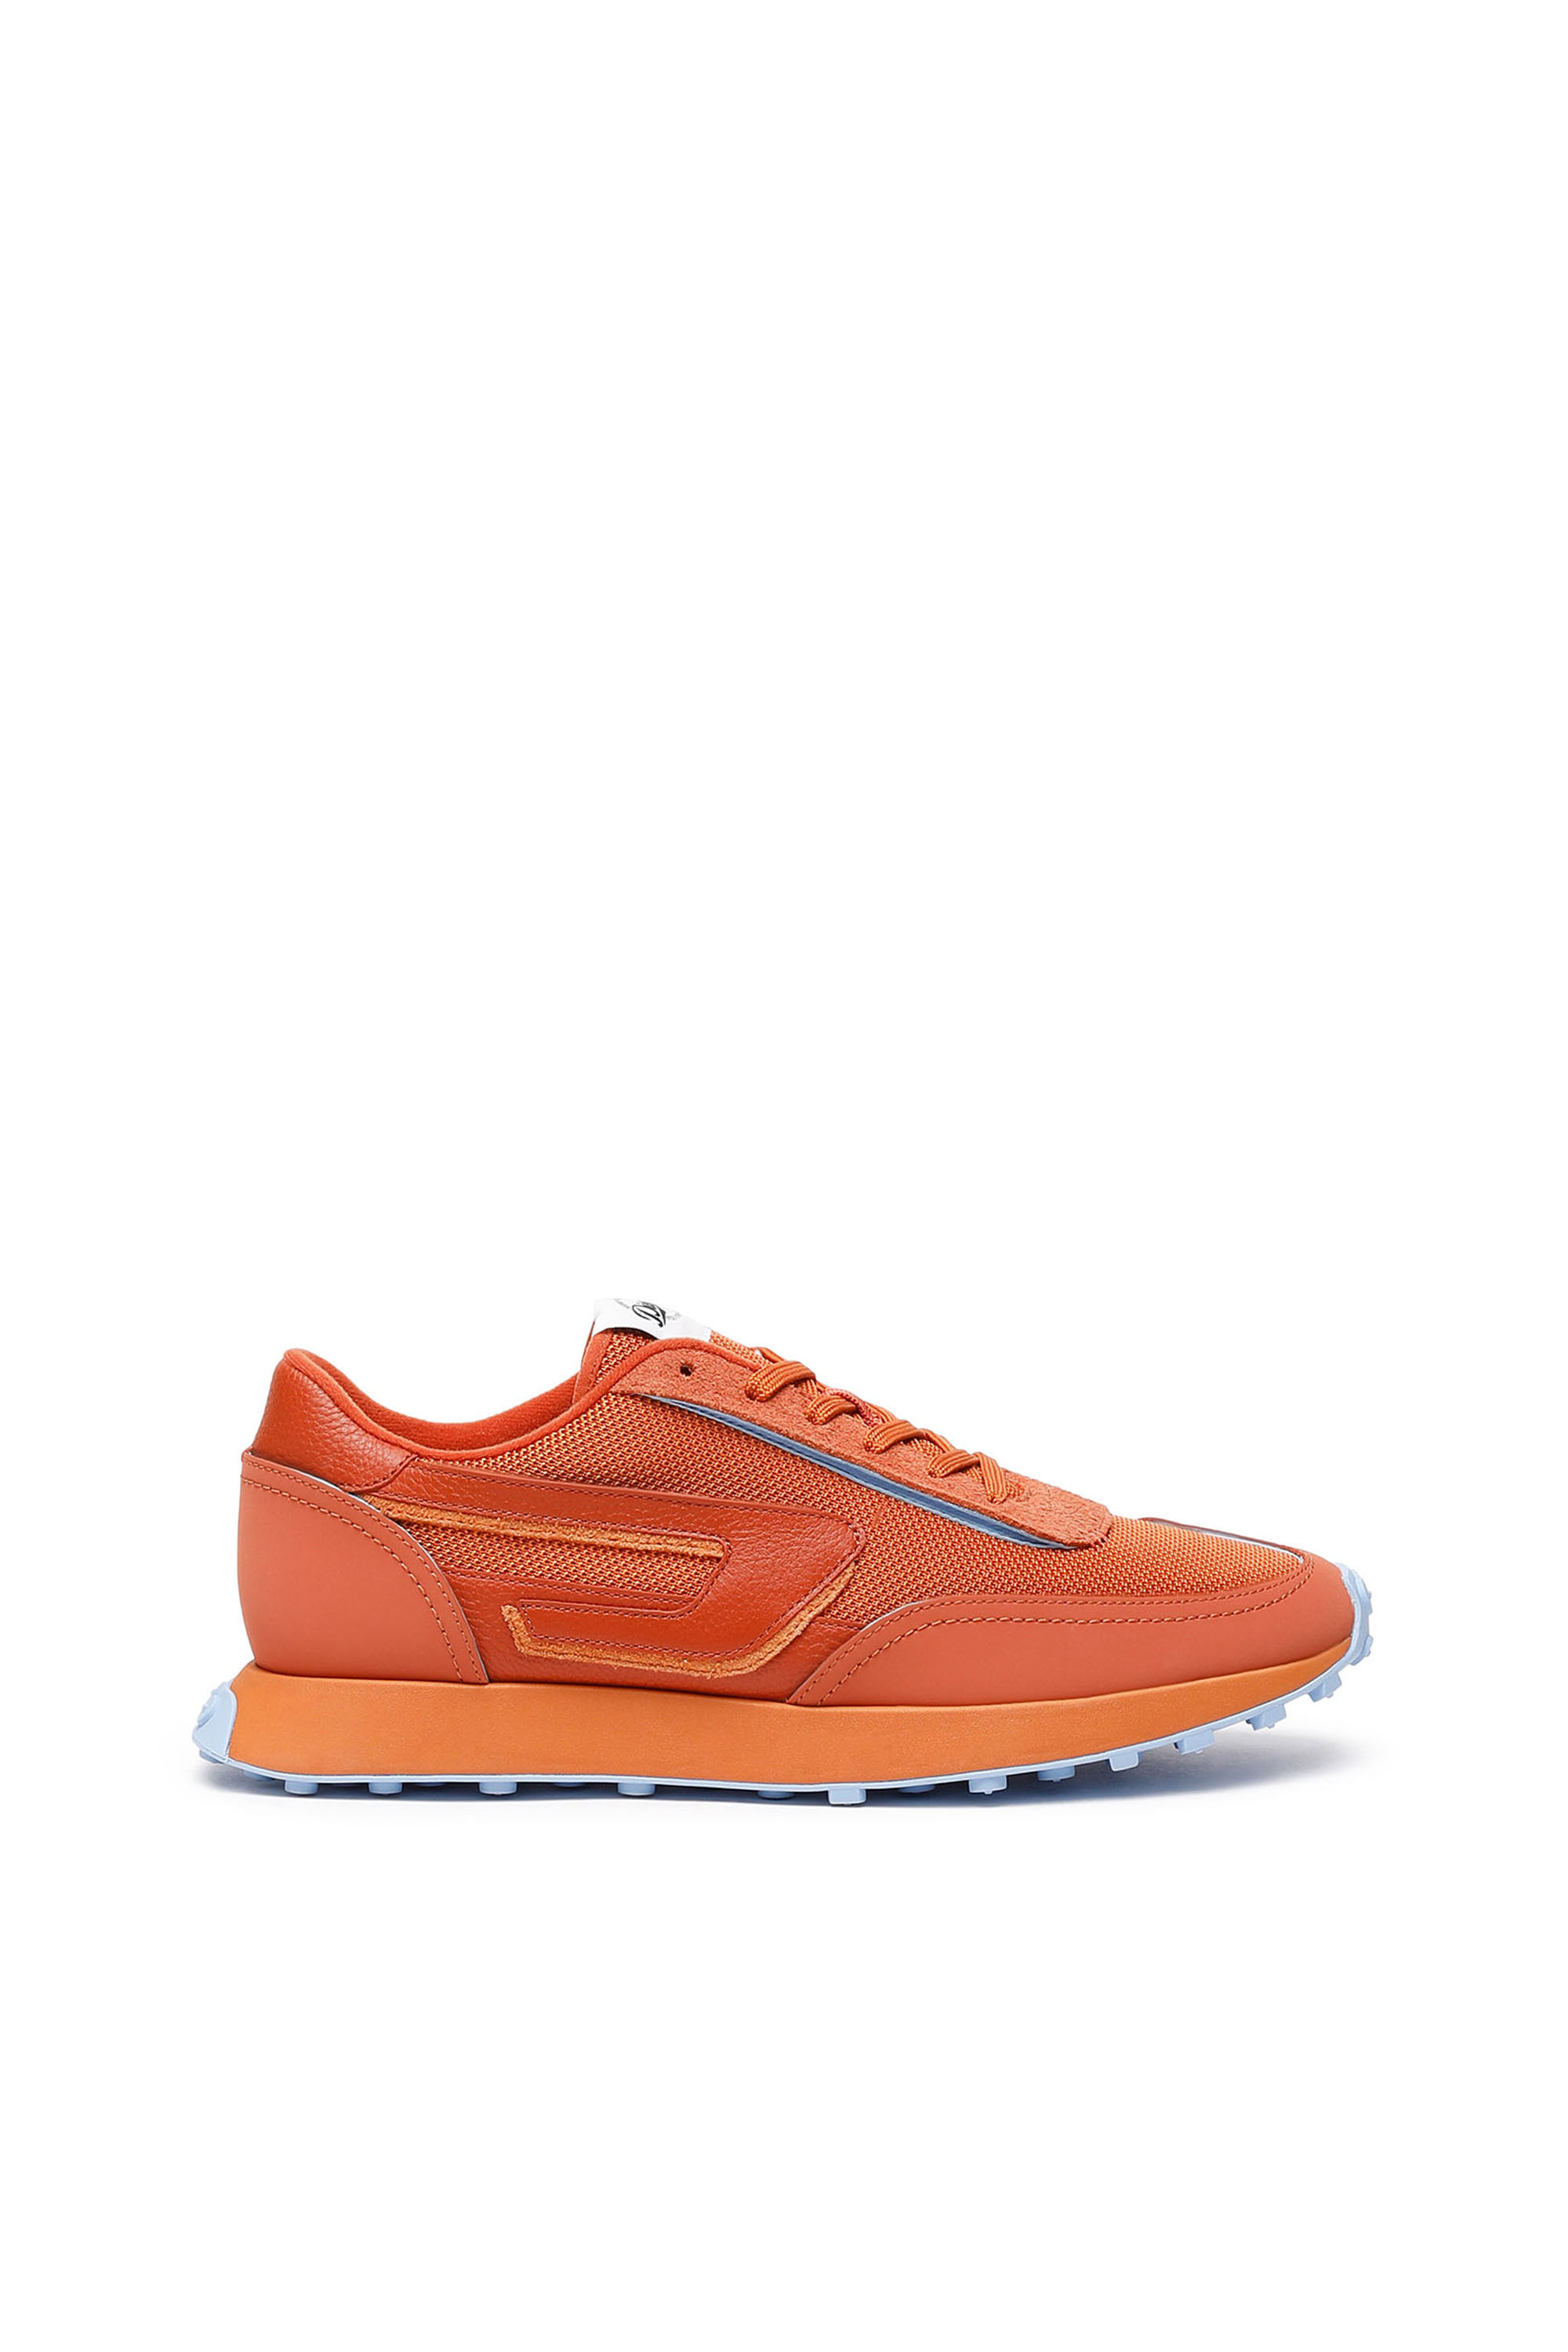 Diesel - Sneaker in mesh, camoscio e pelle - Sneakers - Uomo - Arancione